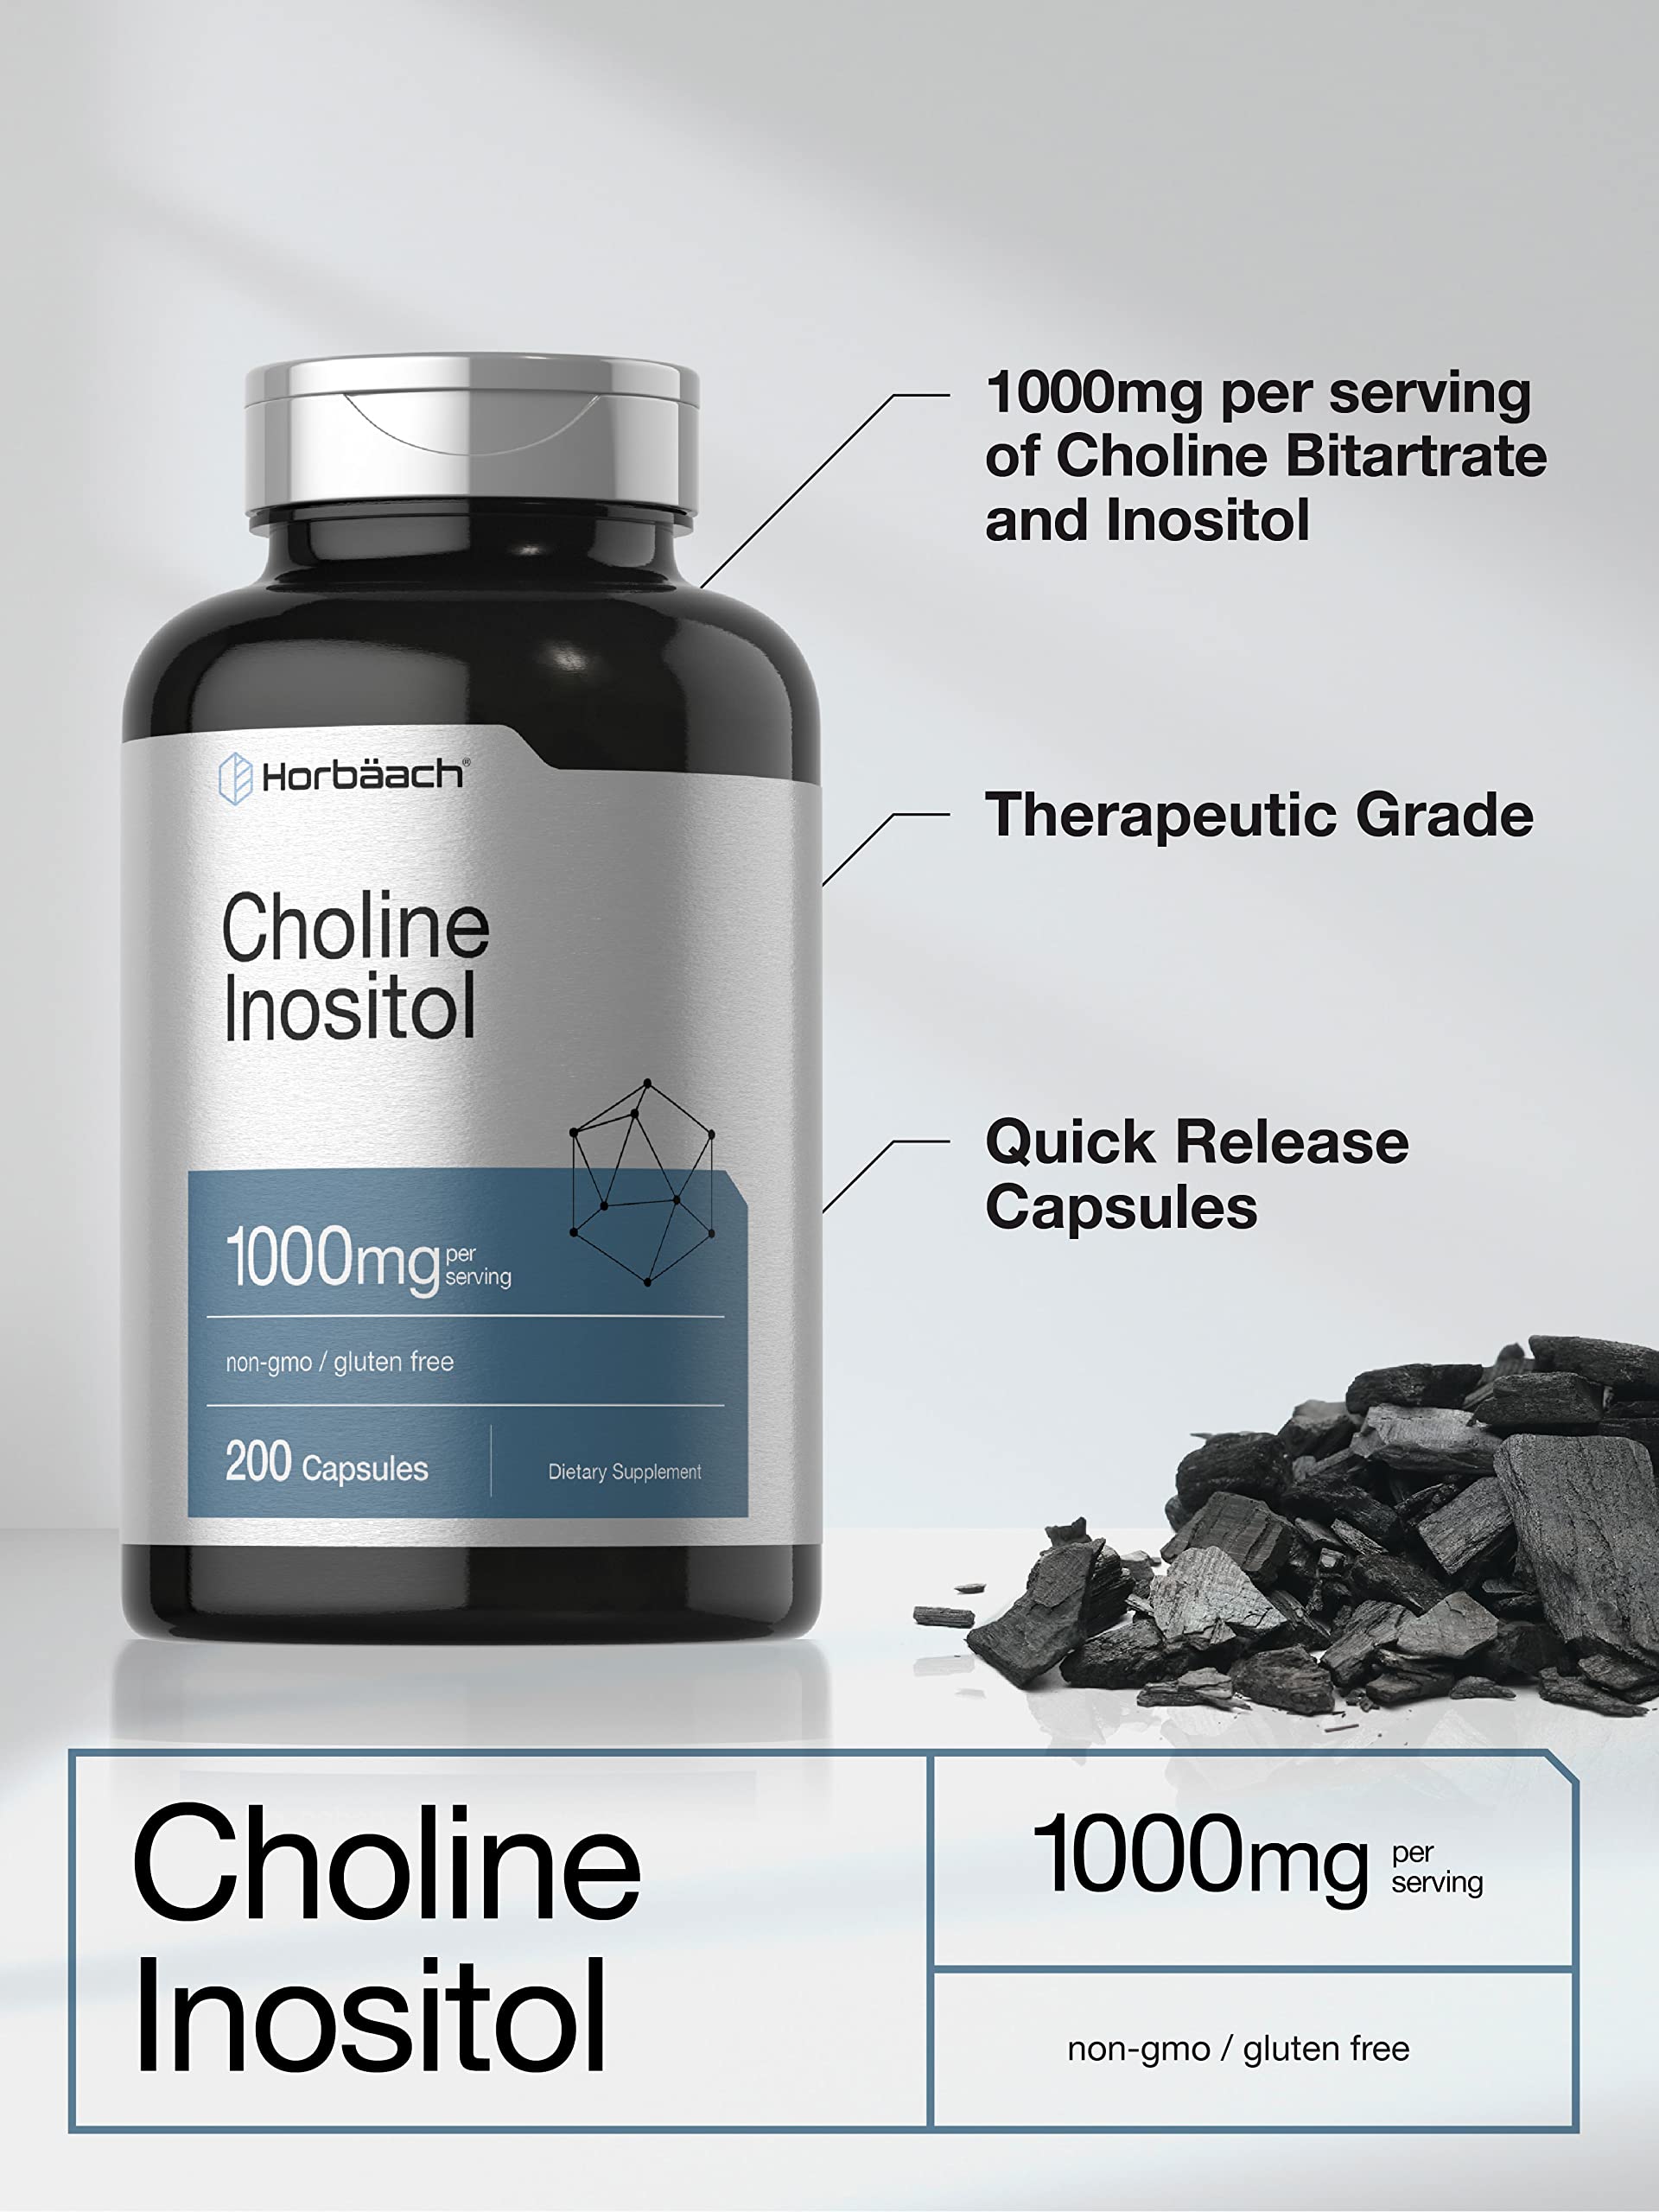 Horbaach Choline Inositol 1000mg Supplement | 200 Capsules | Non-GMO, Gluten Free